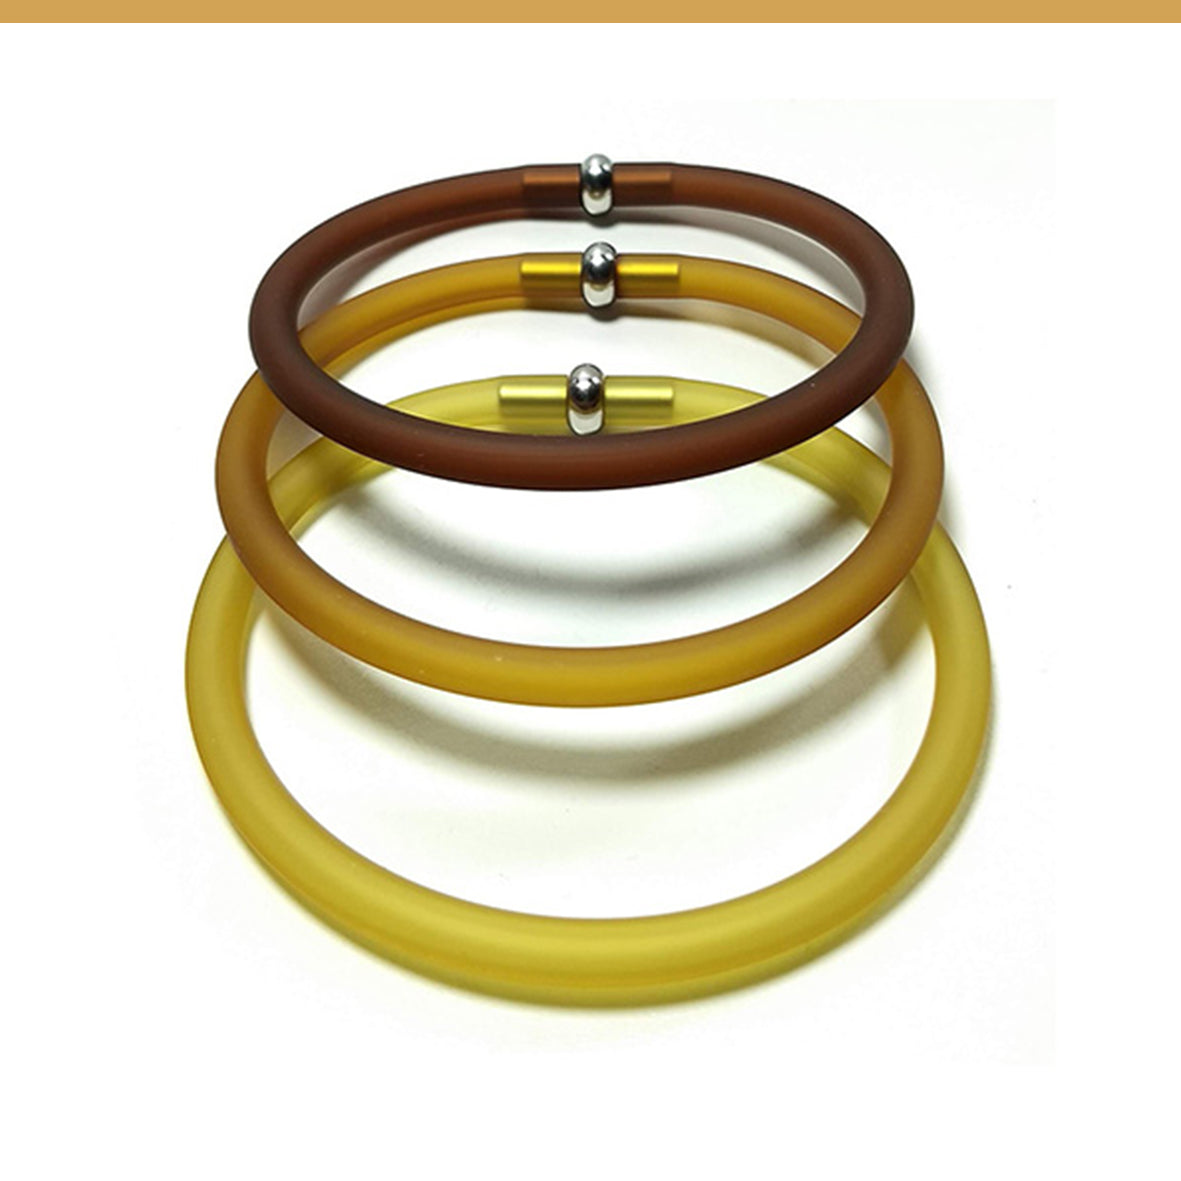 Safari Trio set of 3 rubber bracelets